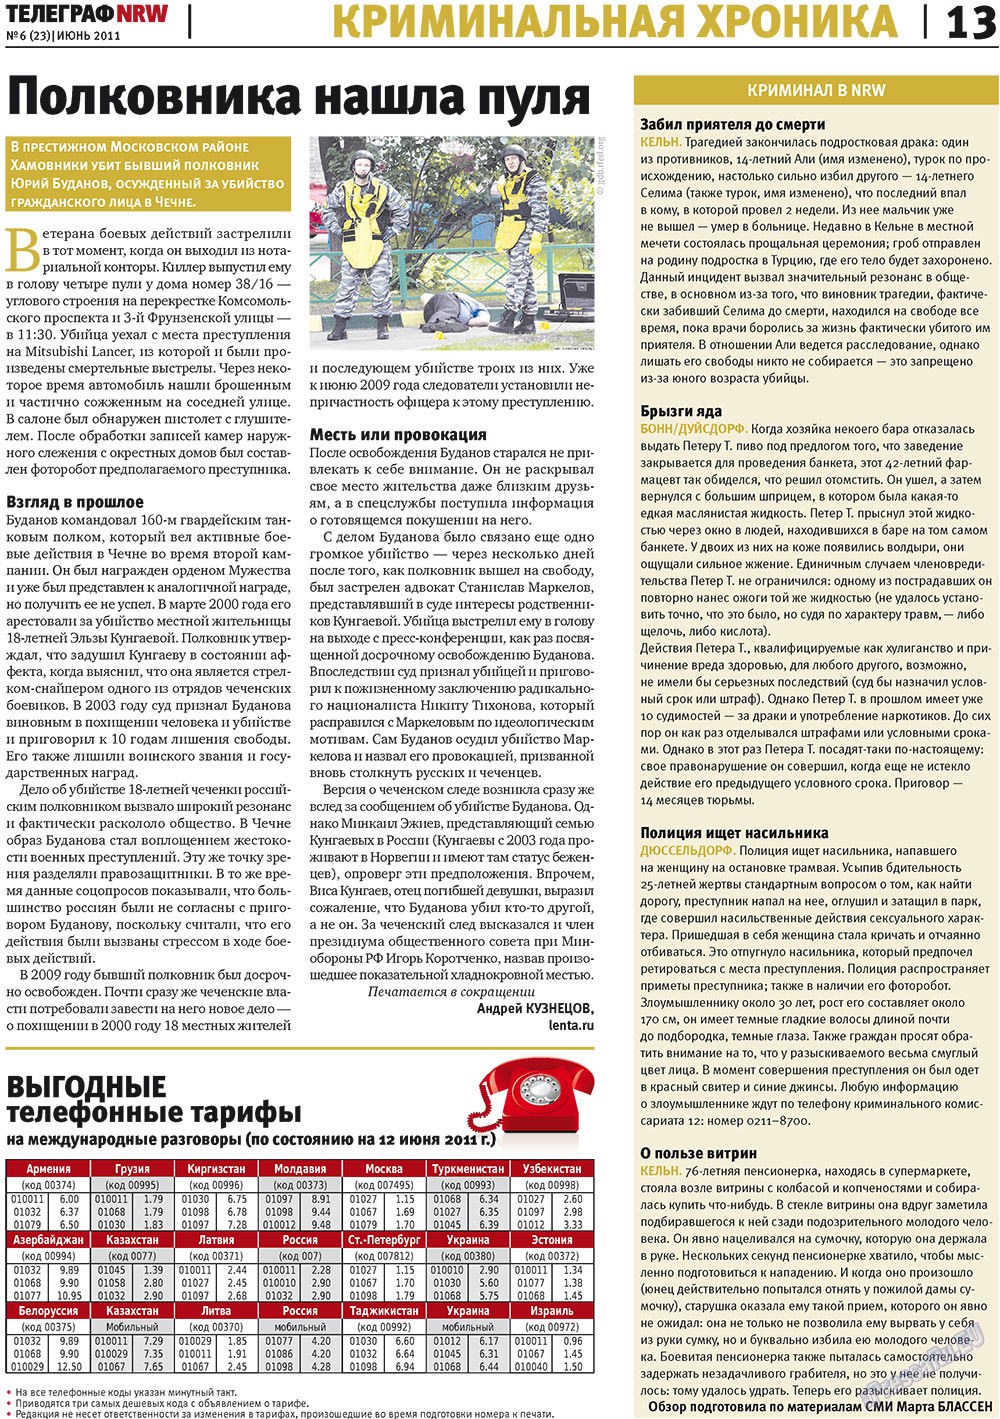 Телеграф NRW, газета. 2011 №6 стр.13